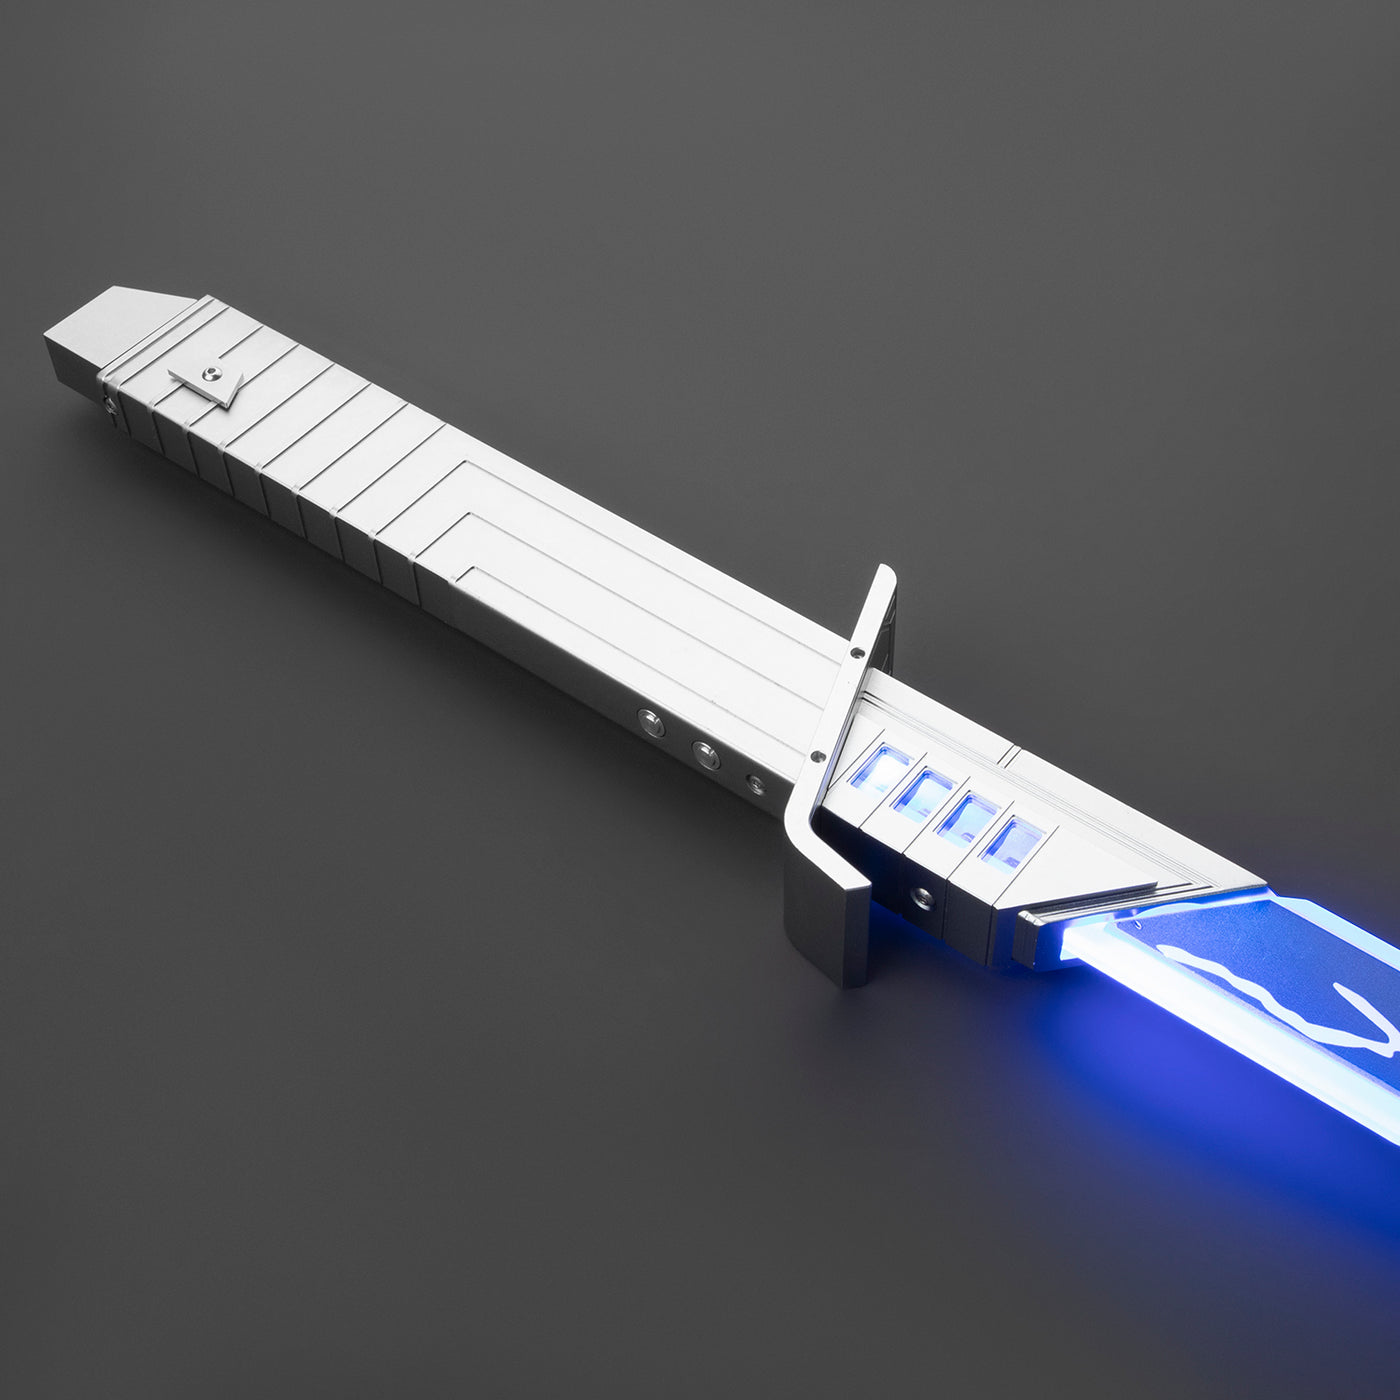 The Grey One - KenJo Sabers - Star Wars Lightsaber replica Jedi Sith - Best sabershop Europe - Nederland light sabers kopen -